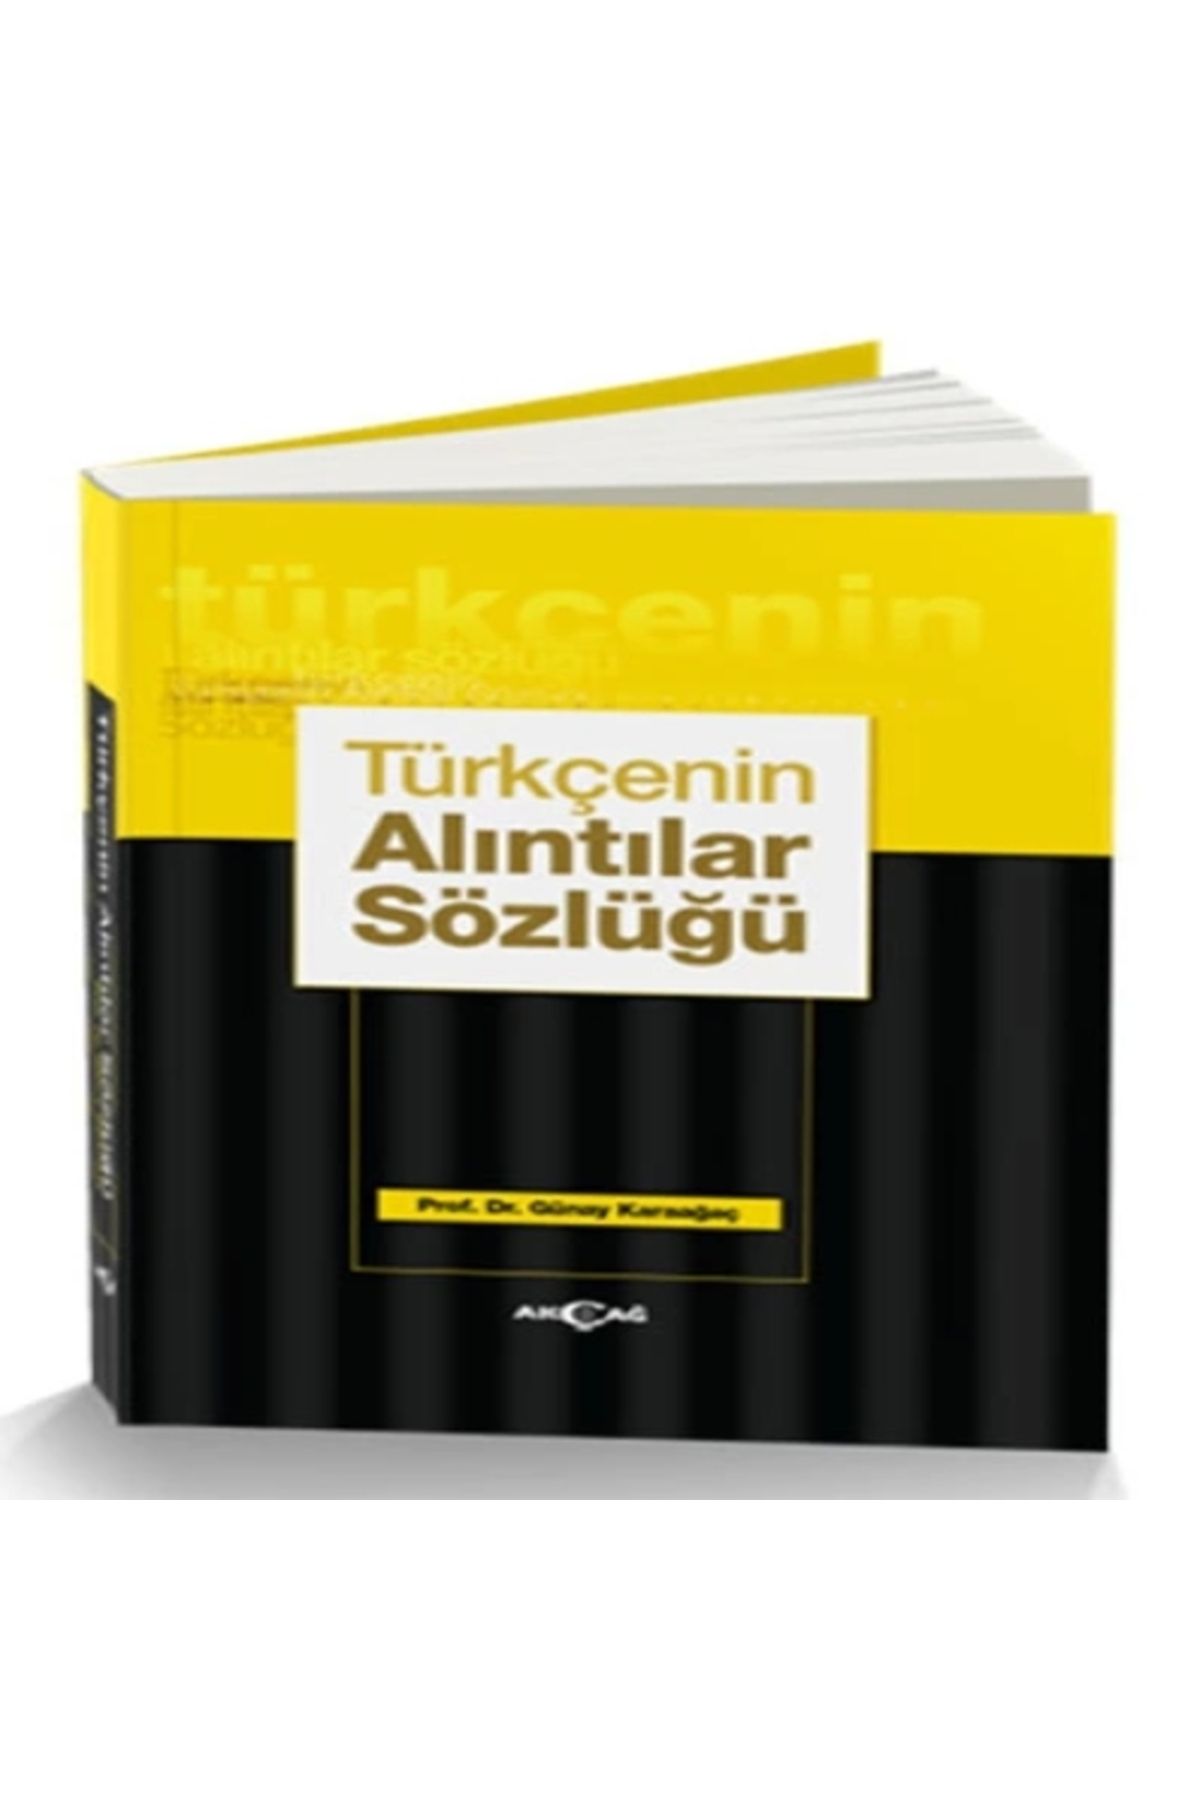 Akçağ Yayınları Türkçenin Alıntılar Sözlüğü